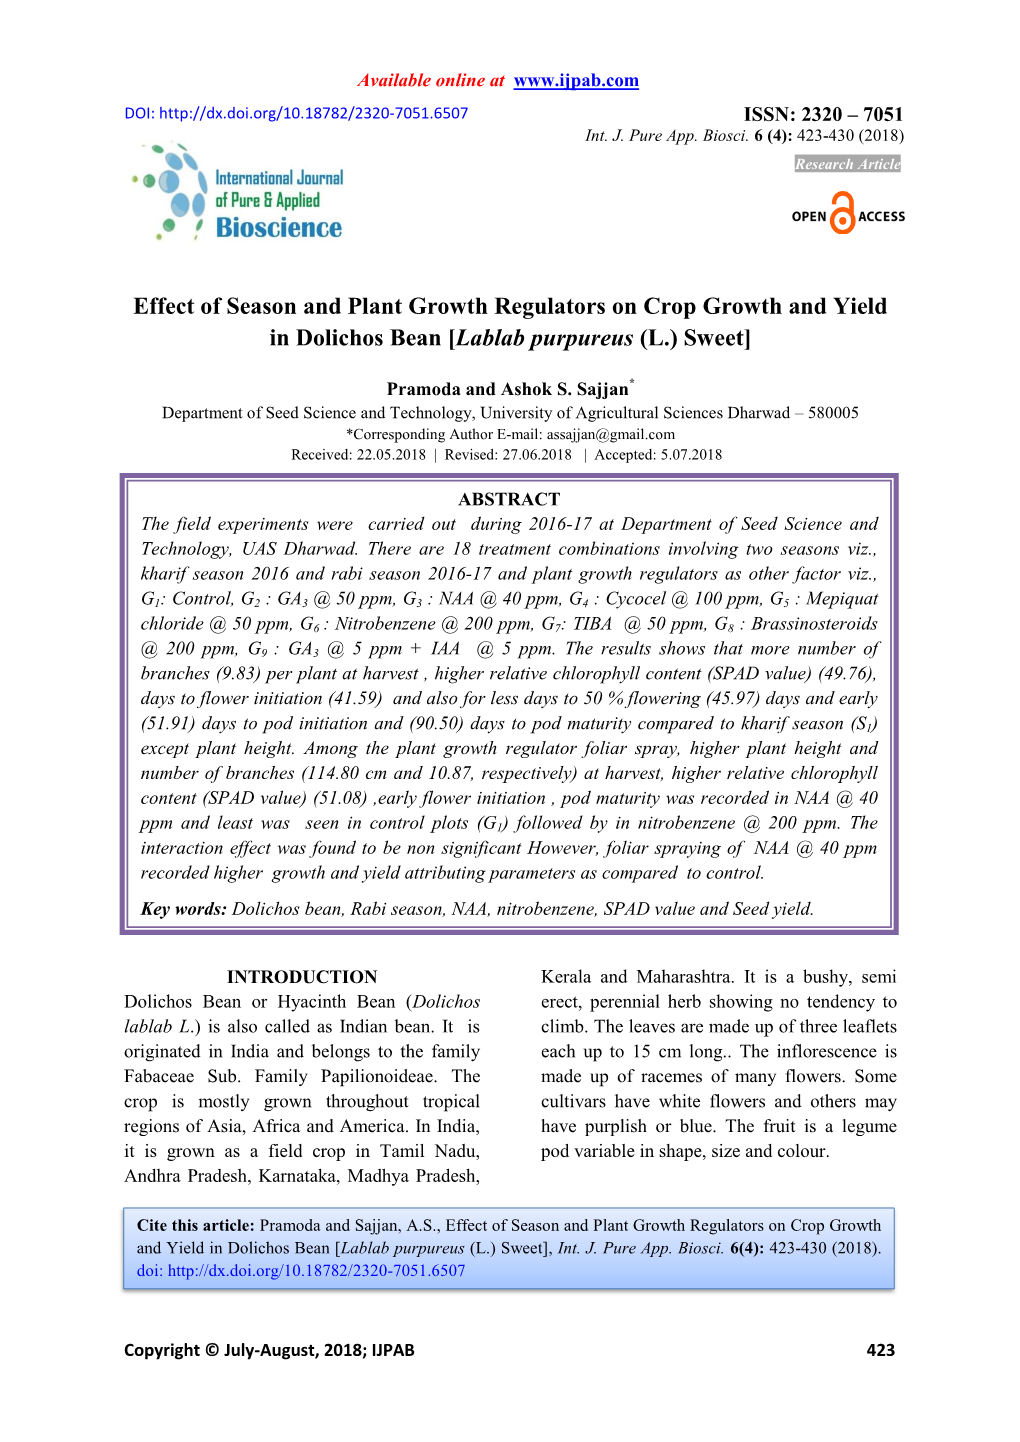 Effect of Season and Plant Growth Regulators on Crop Growth and Yield in Dolichos Bean [Lablab Purpureus (L.) Sweet]